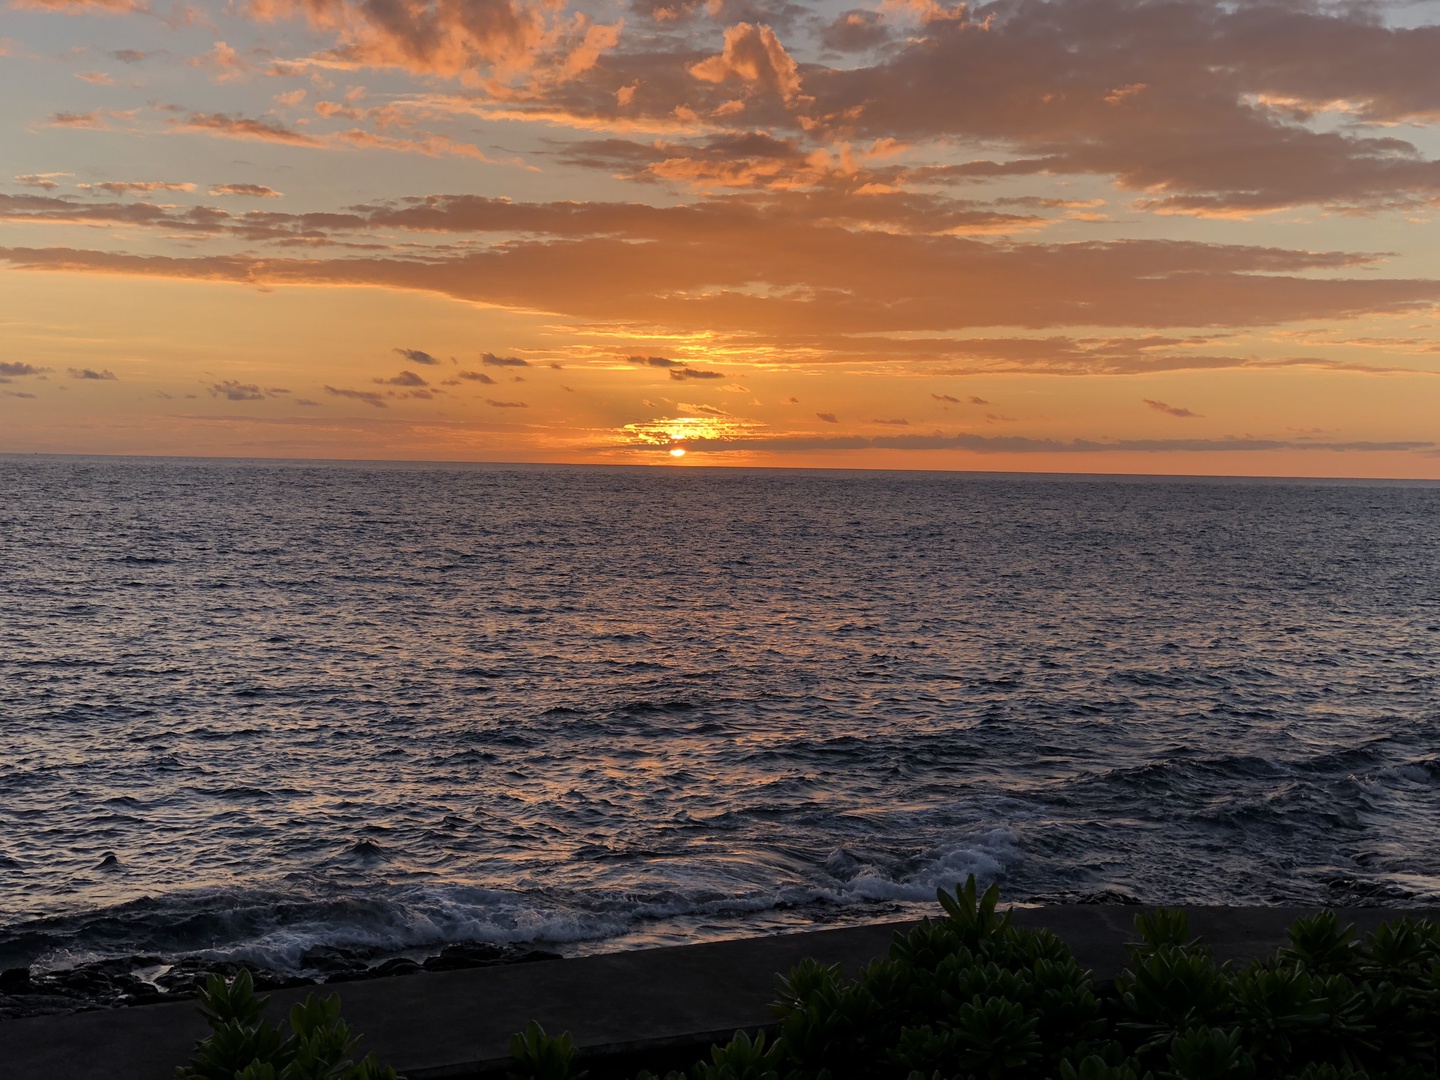 Kailua Kona Vacation Rentals, Hoku'Ea Hale - Sunsets every evening from your lanai!